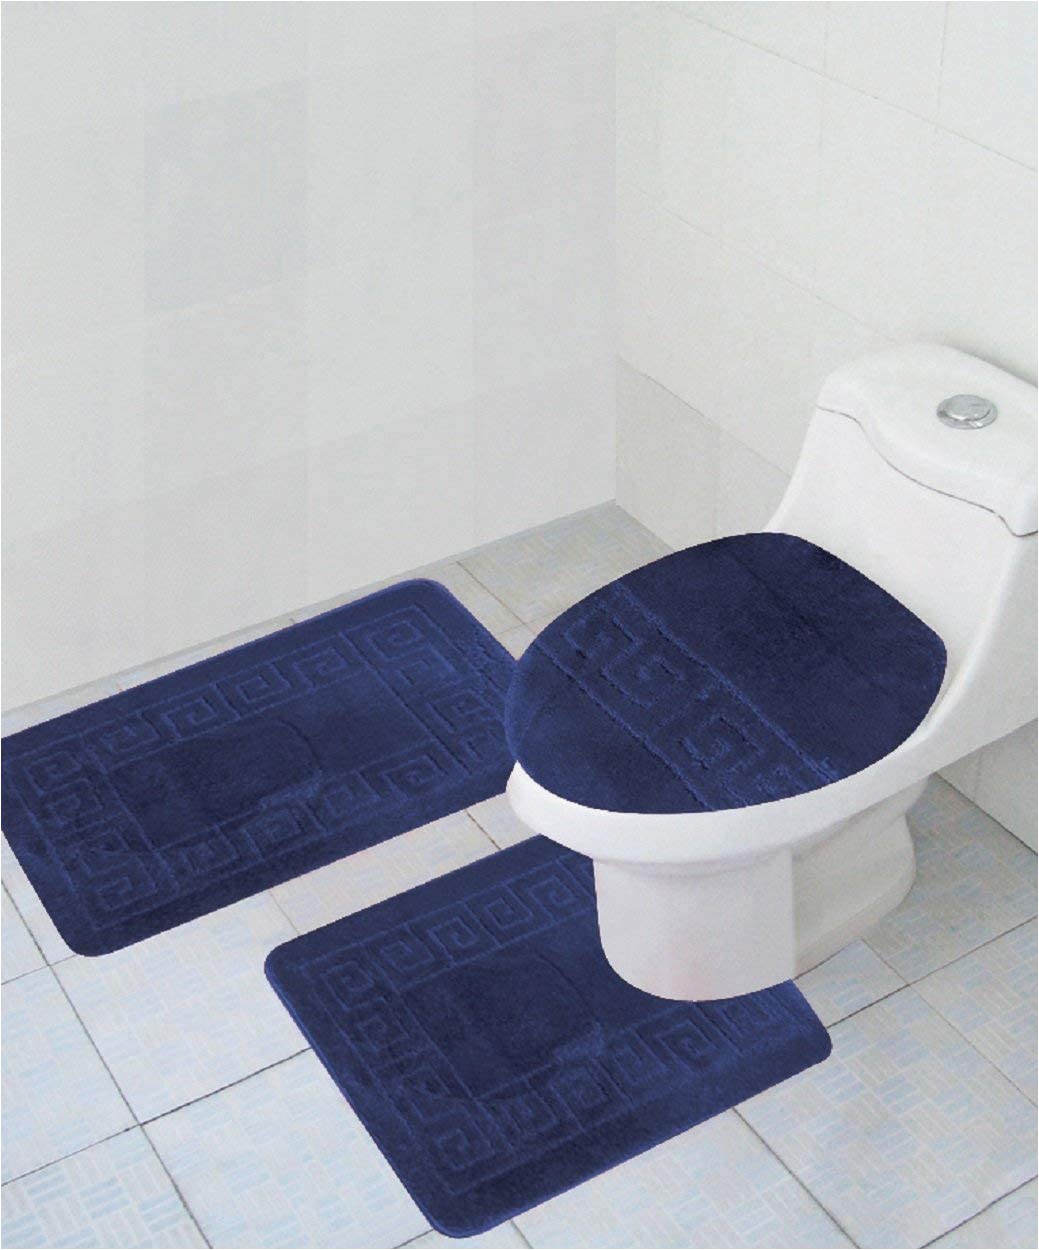 Fall Bathroom Rug Sets 3 Piece Bath Rug Set Pattern Bathroom Rug 20"x32" Contour Mat 20"x20" with Lid Cover Sky Blue